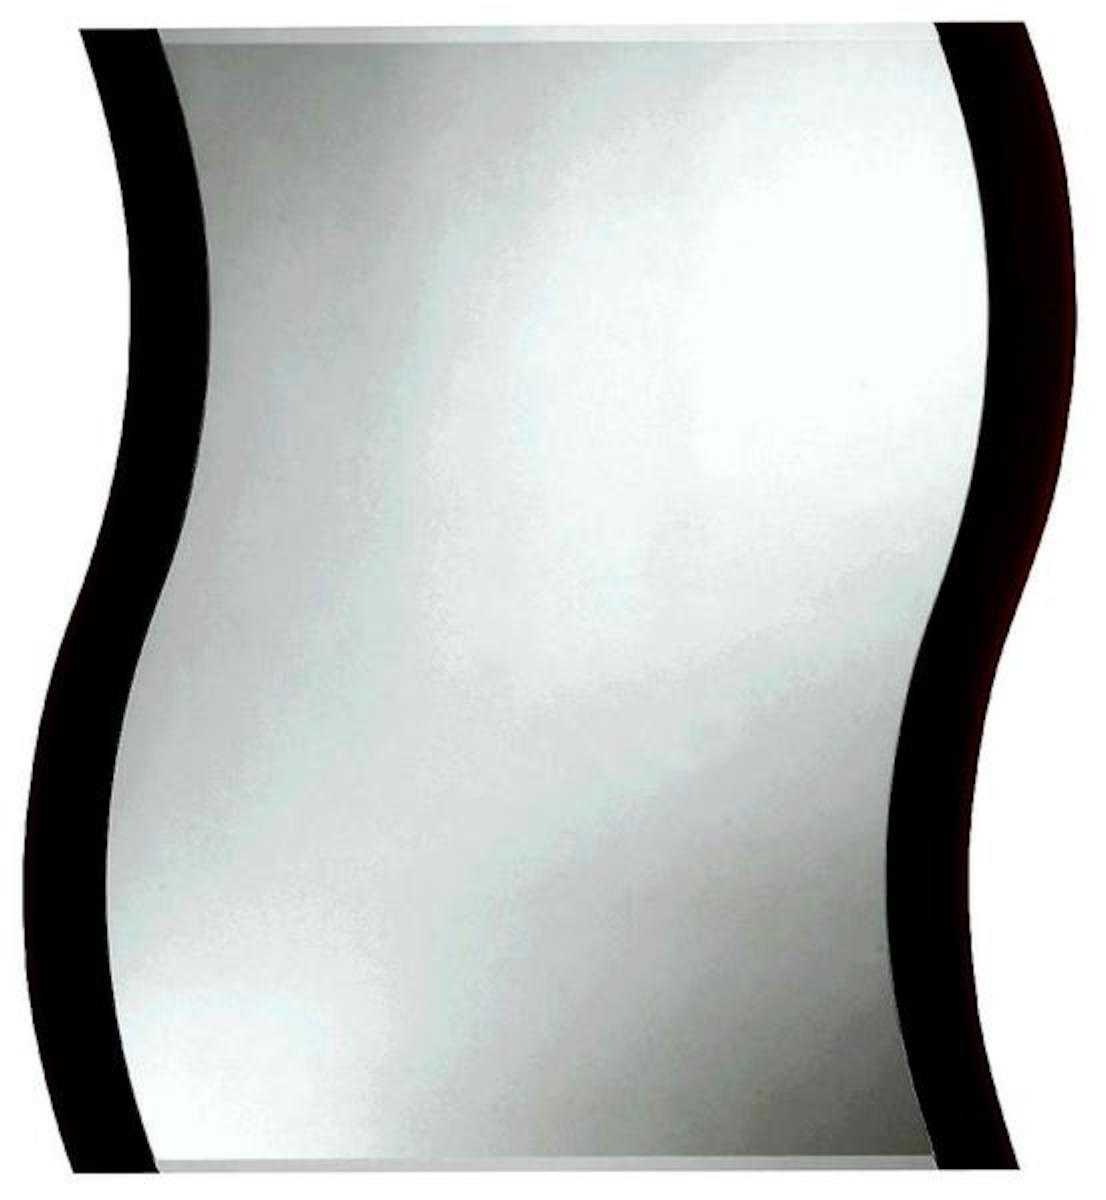 Zrcadlo s fazetou Amirro Storm Black 65x50 cm černá 711-737S Amirro